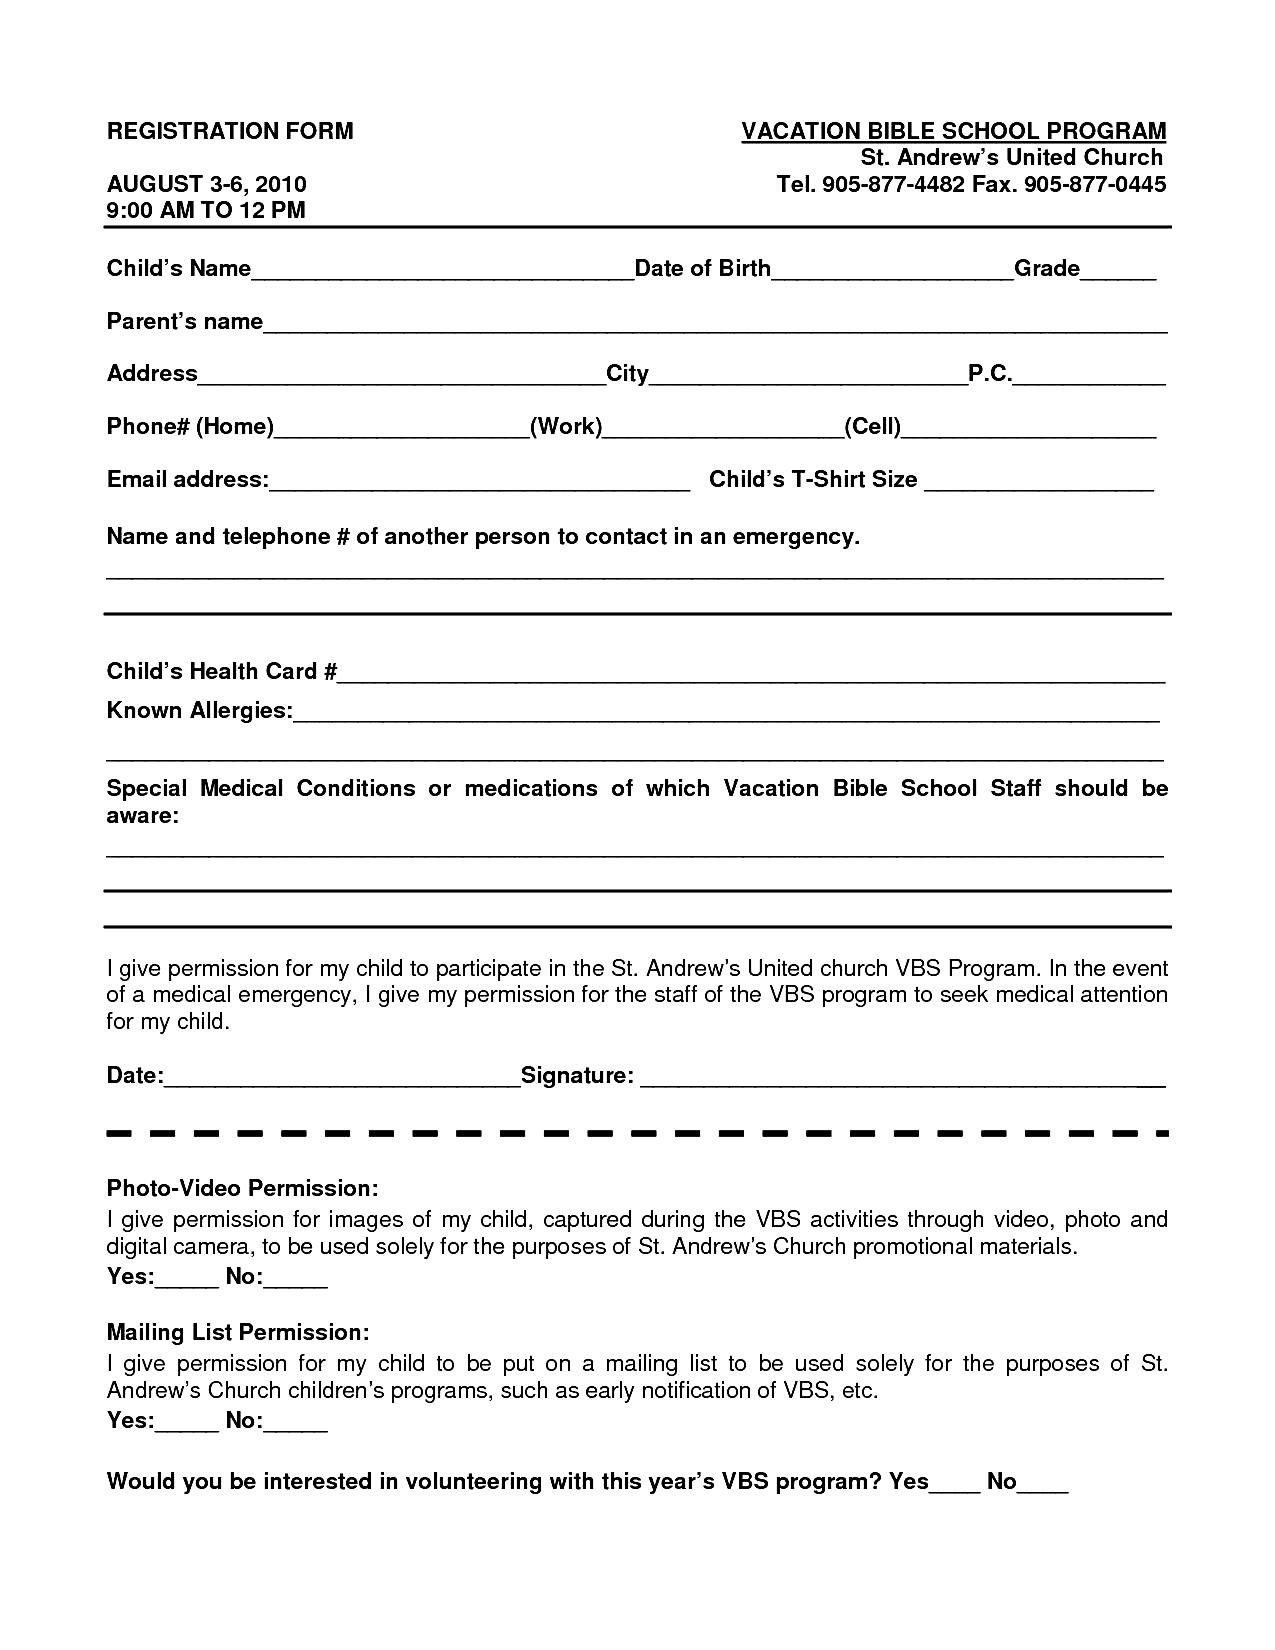 School Registration Form Template Word  Ideas Free pertaining to Camp Registration Form Template Word